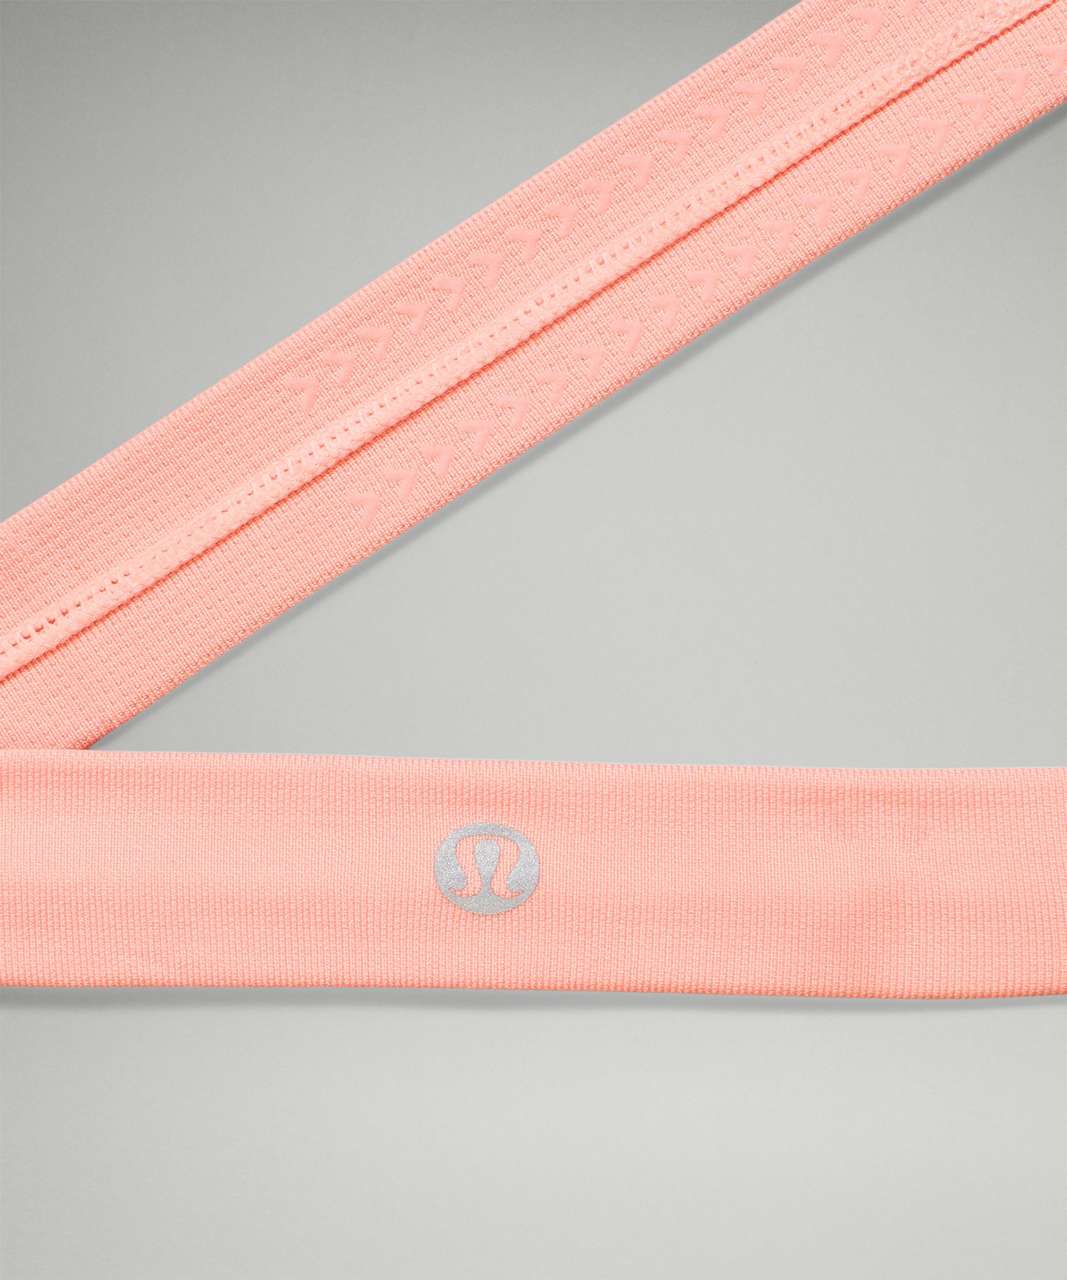 Lululemon Cardio Cross Trainer Headband - Dew Pink